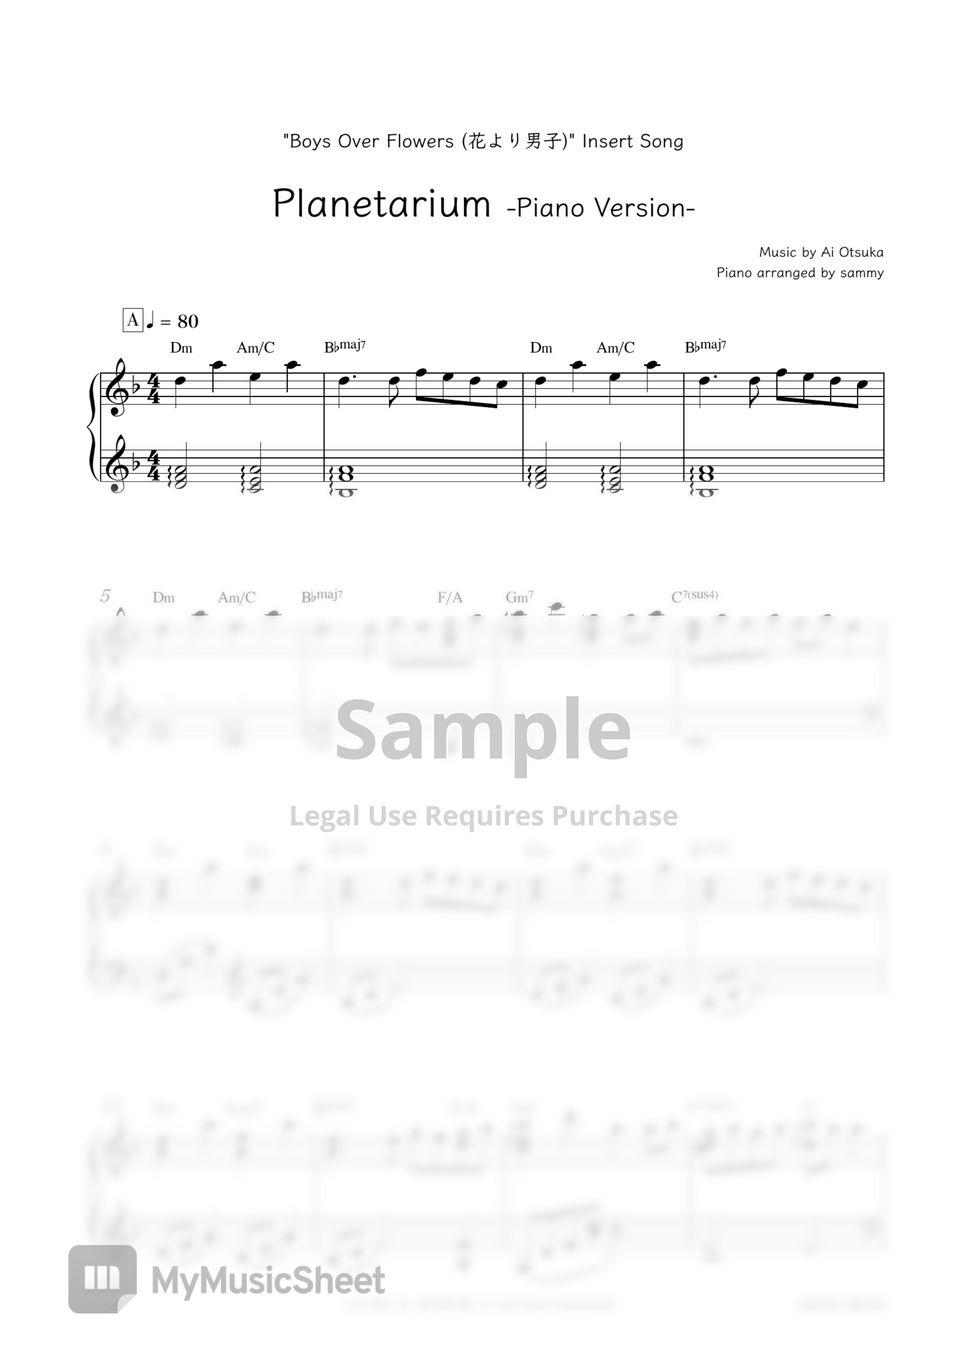 Ai Otsuka(大塚愛) - Planetarium -Piano Version- by sammy